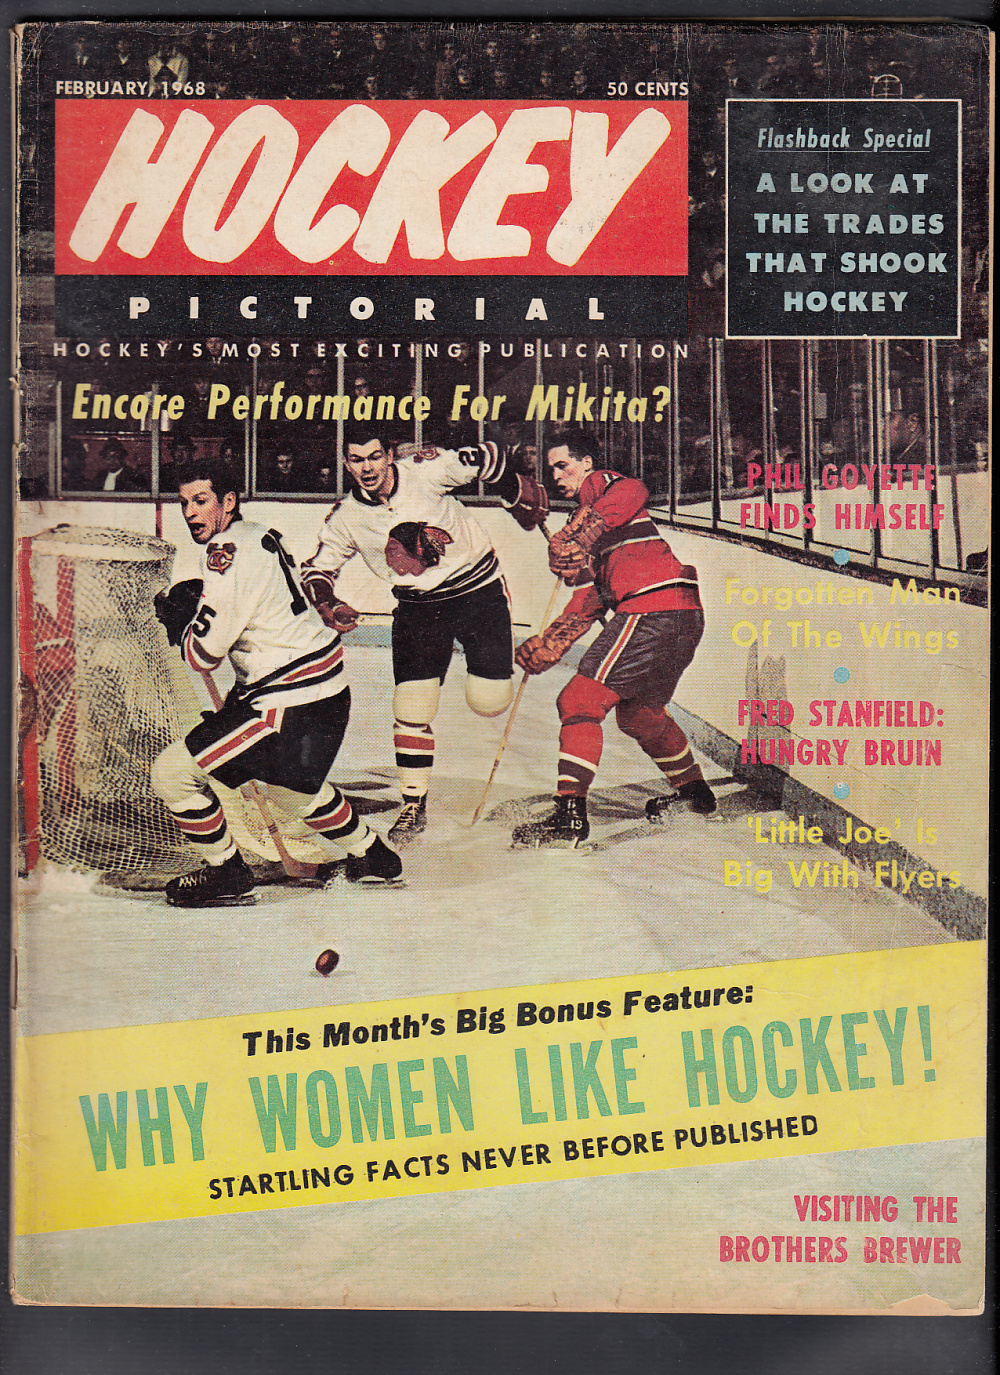 1968 HOCKEY PICTORIAL MAGAZINE S. MIKITA ON COVER photo